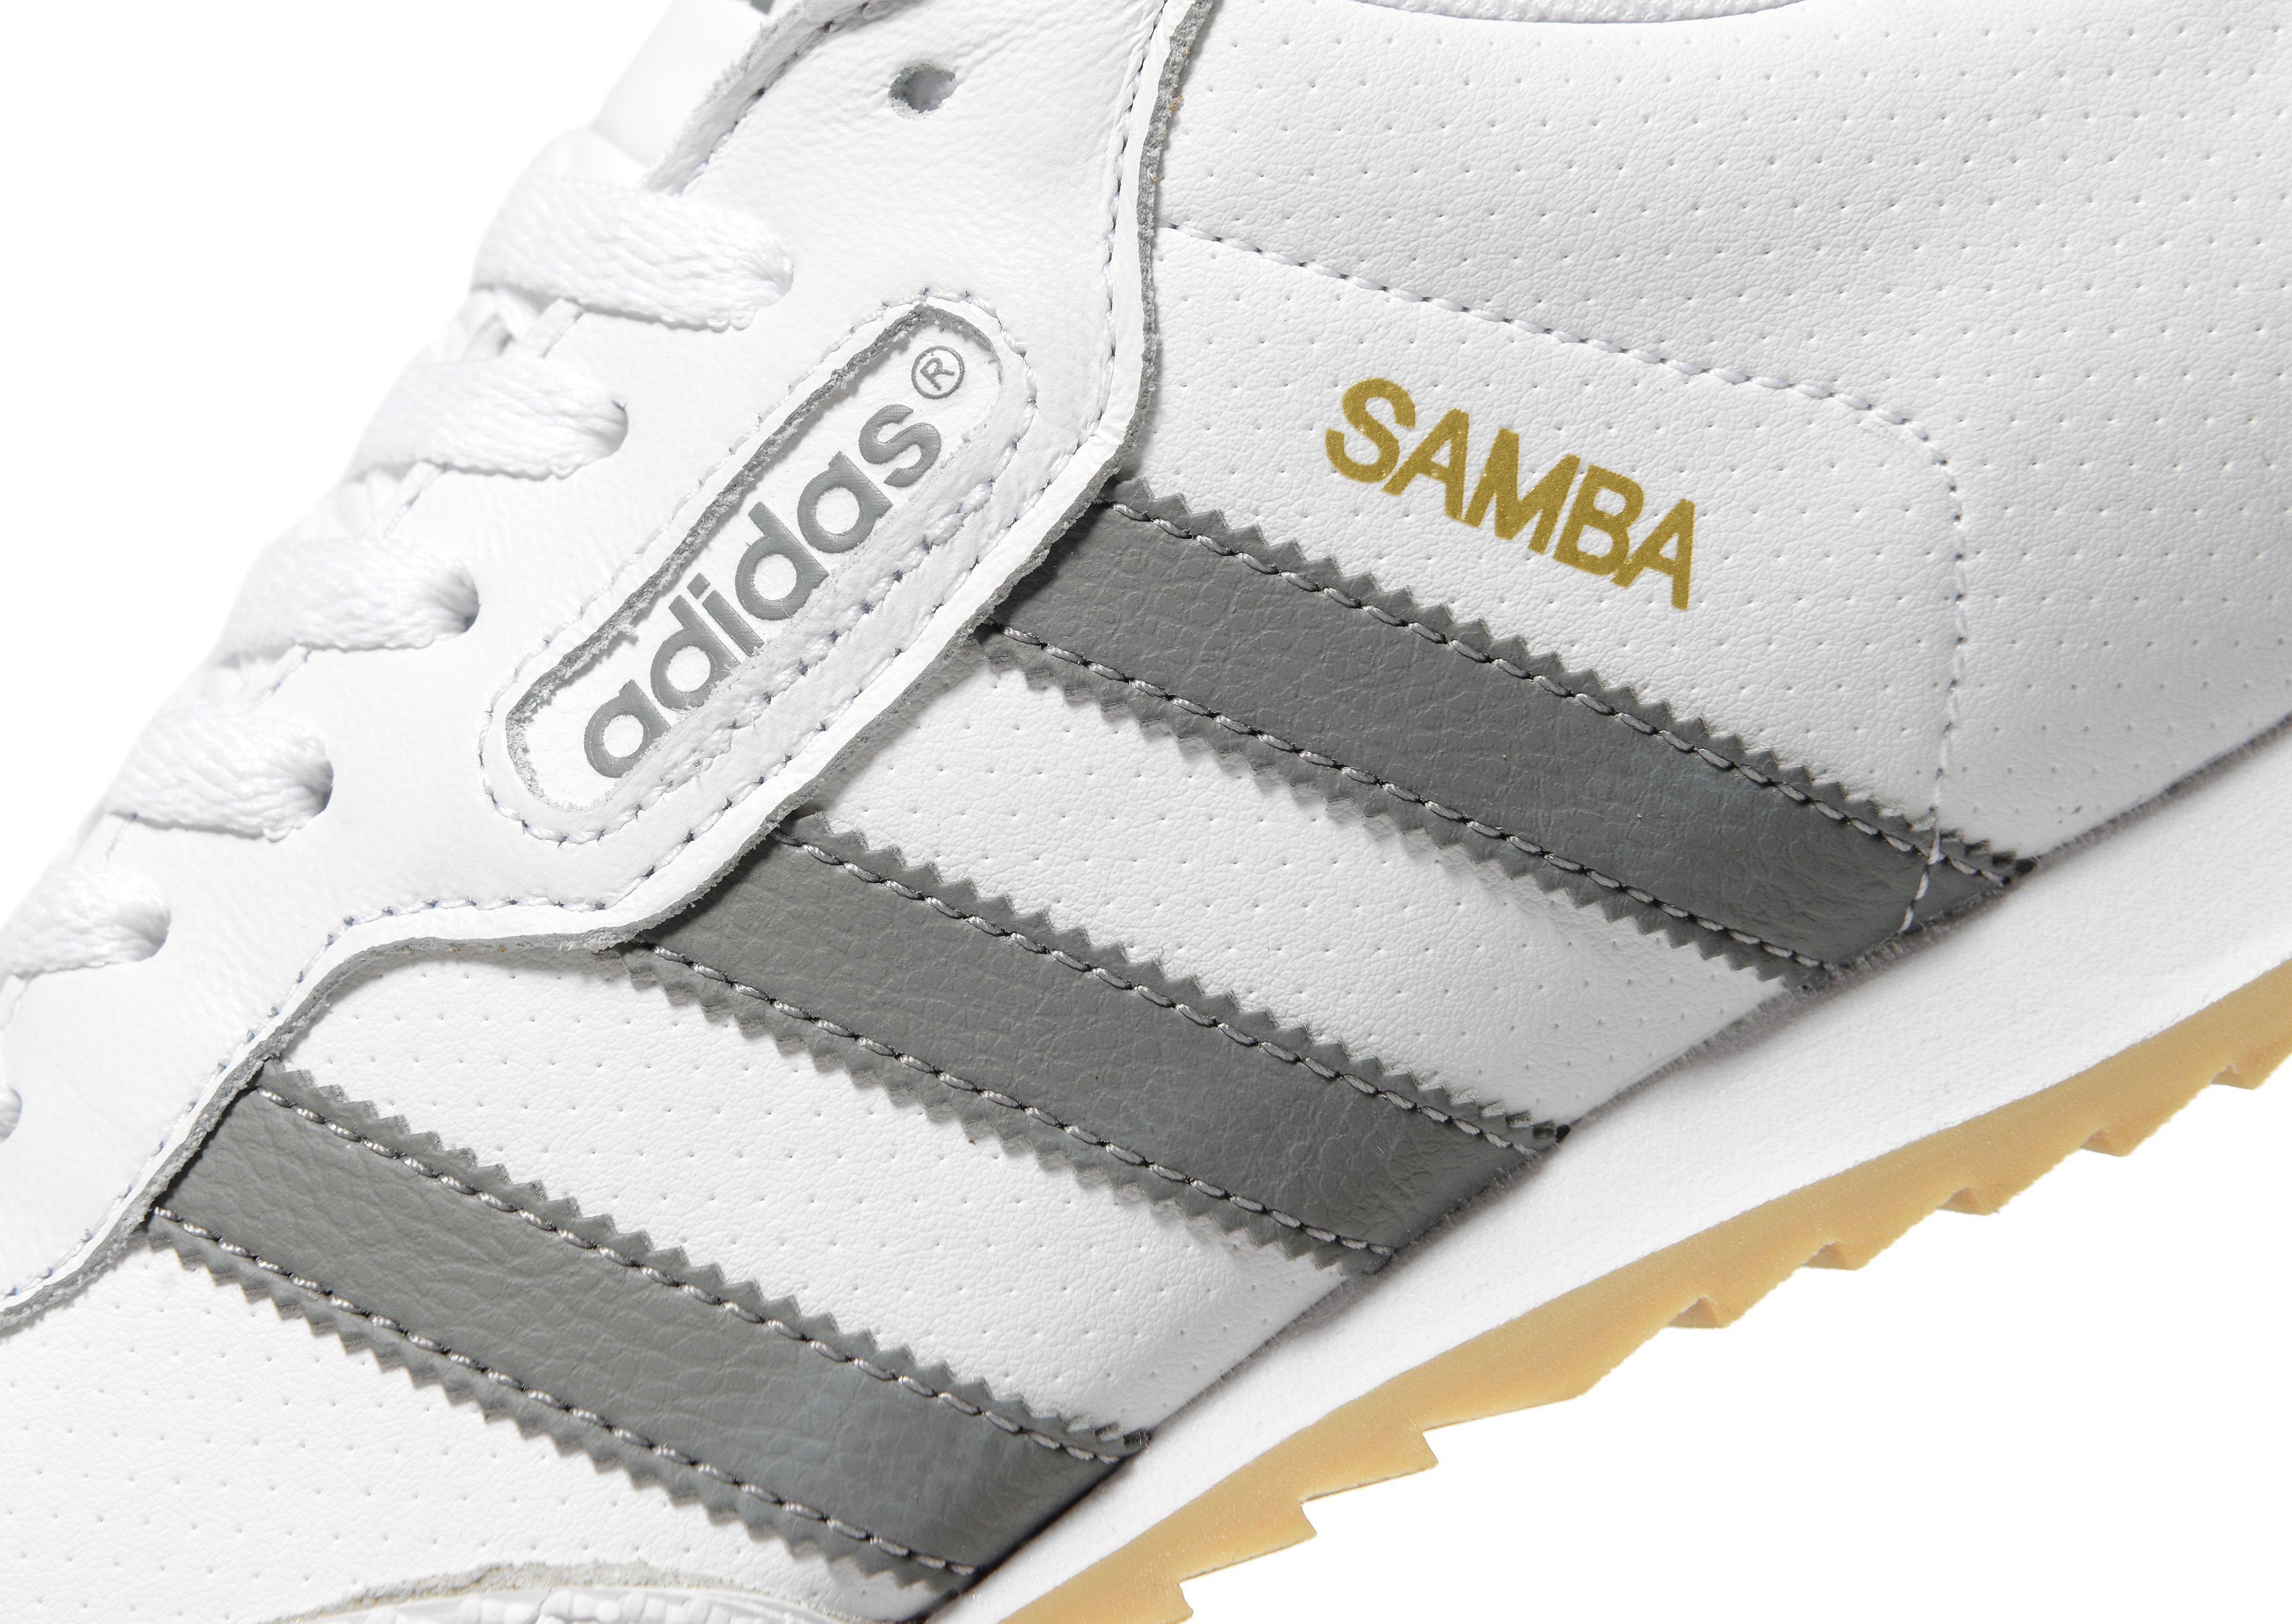 grey adidas samba trainers